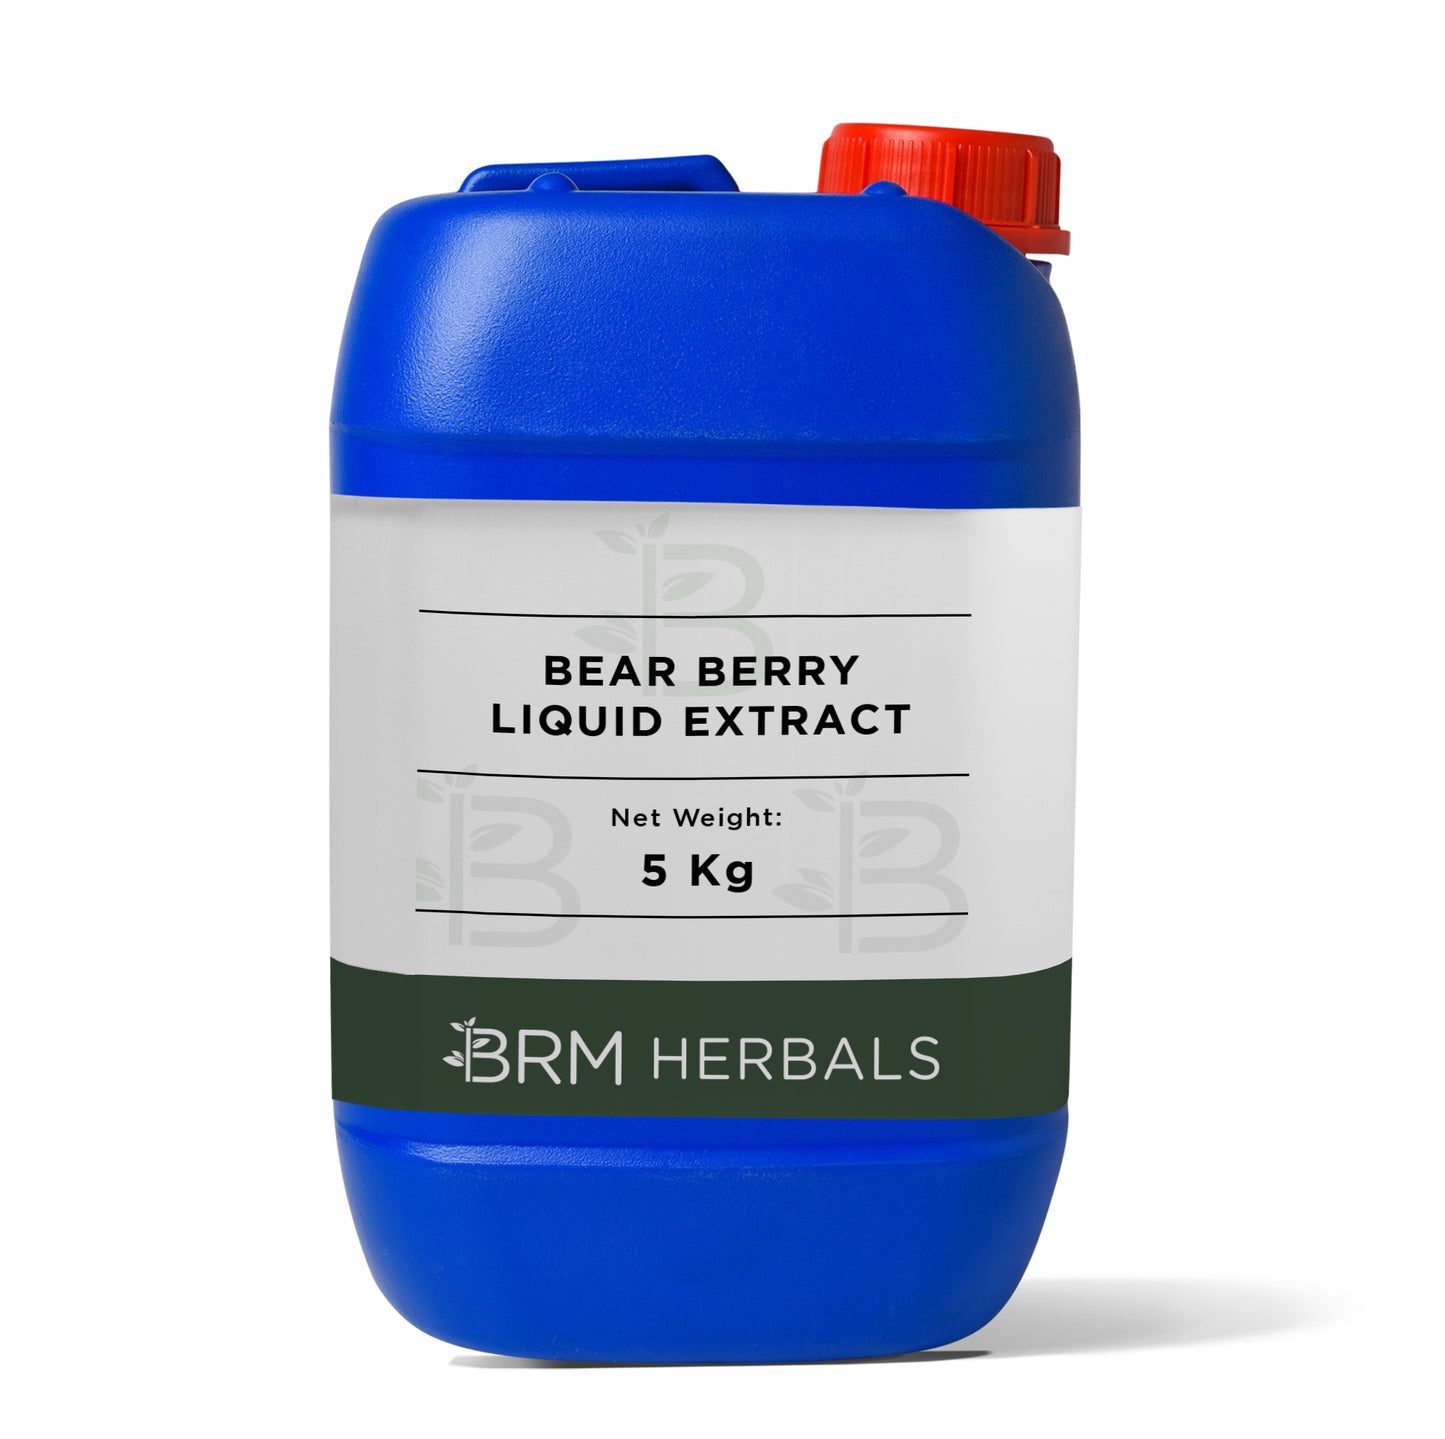 Bear Berry Liquid Extract